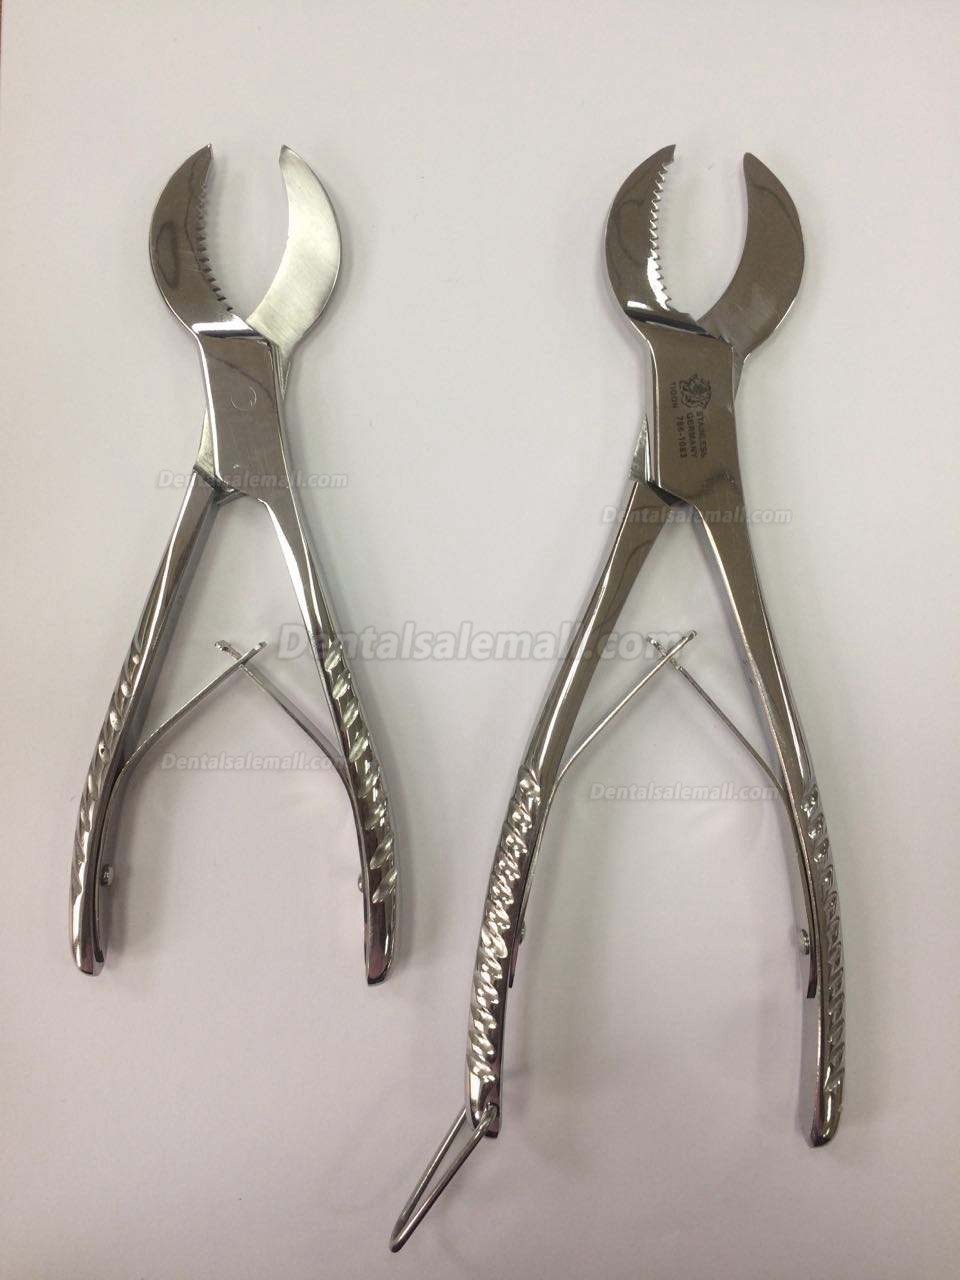 Dental Plaster Scissors Cutting Pliers Gypsum Shears Dental Laboratory Equipment